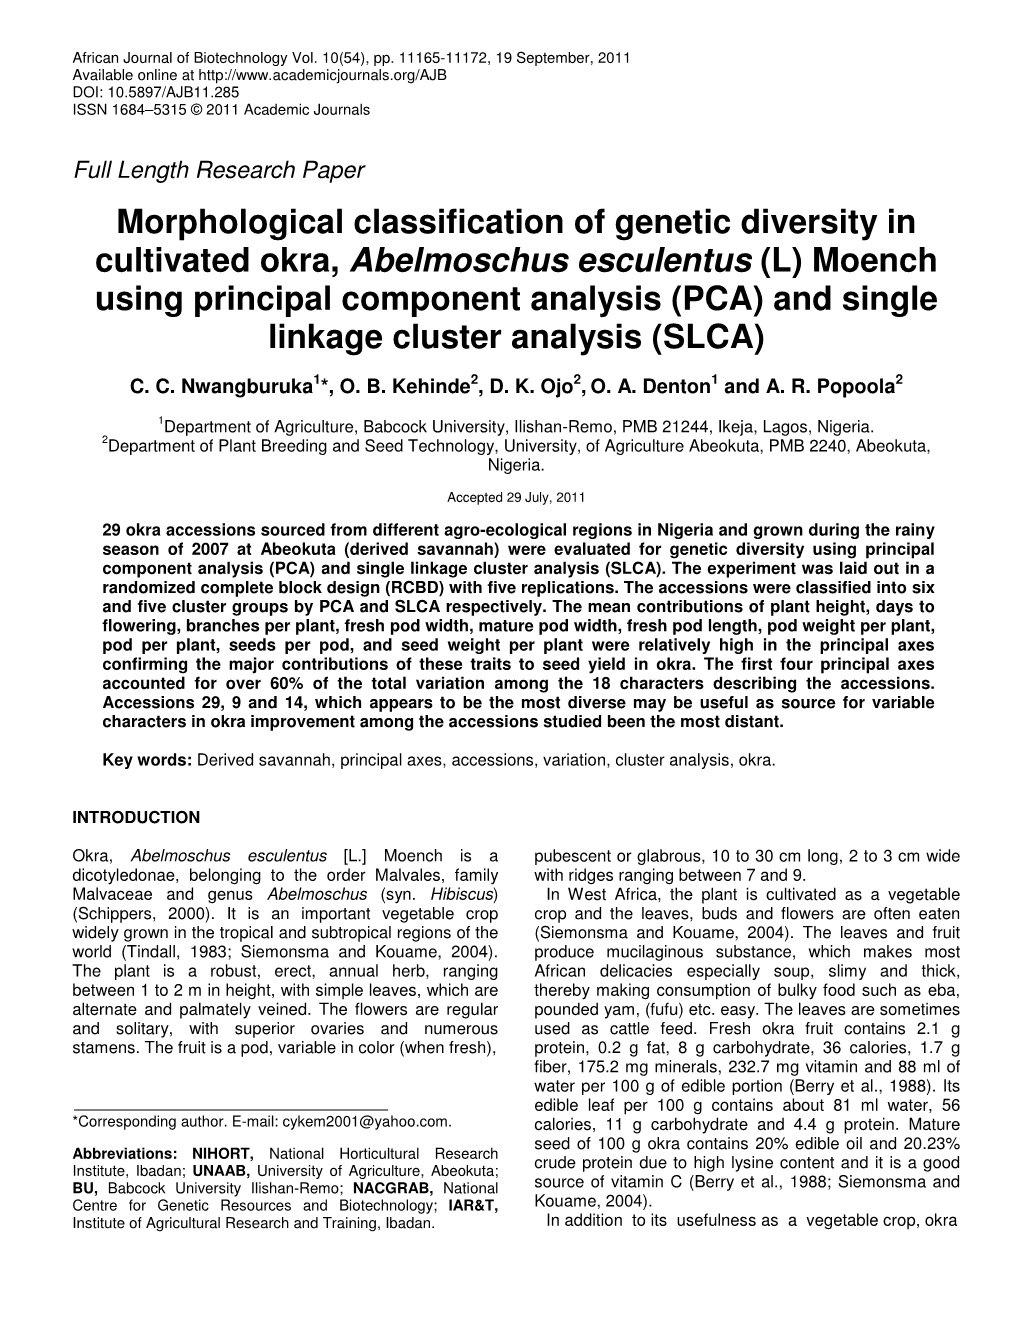 Morphological Classification of Genetic Diversity